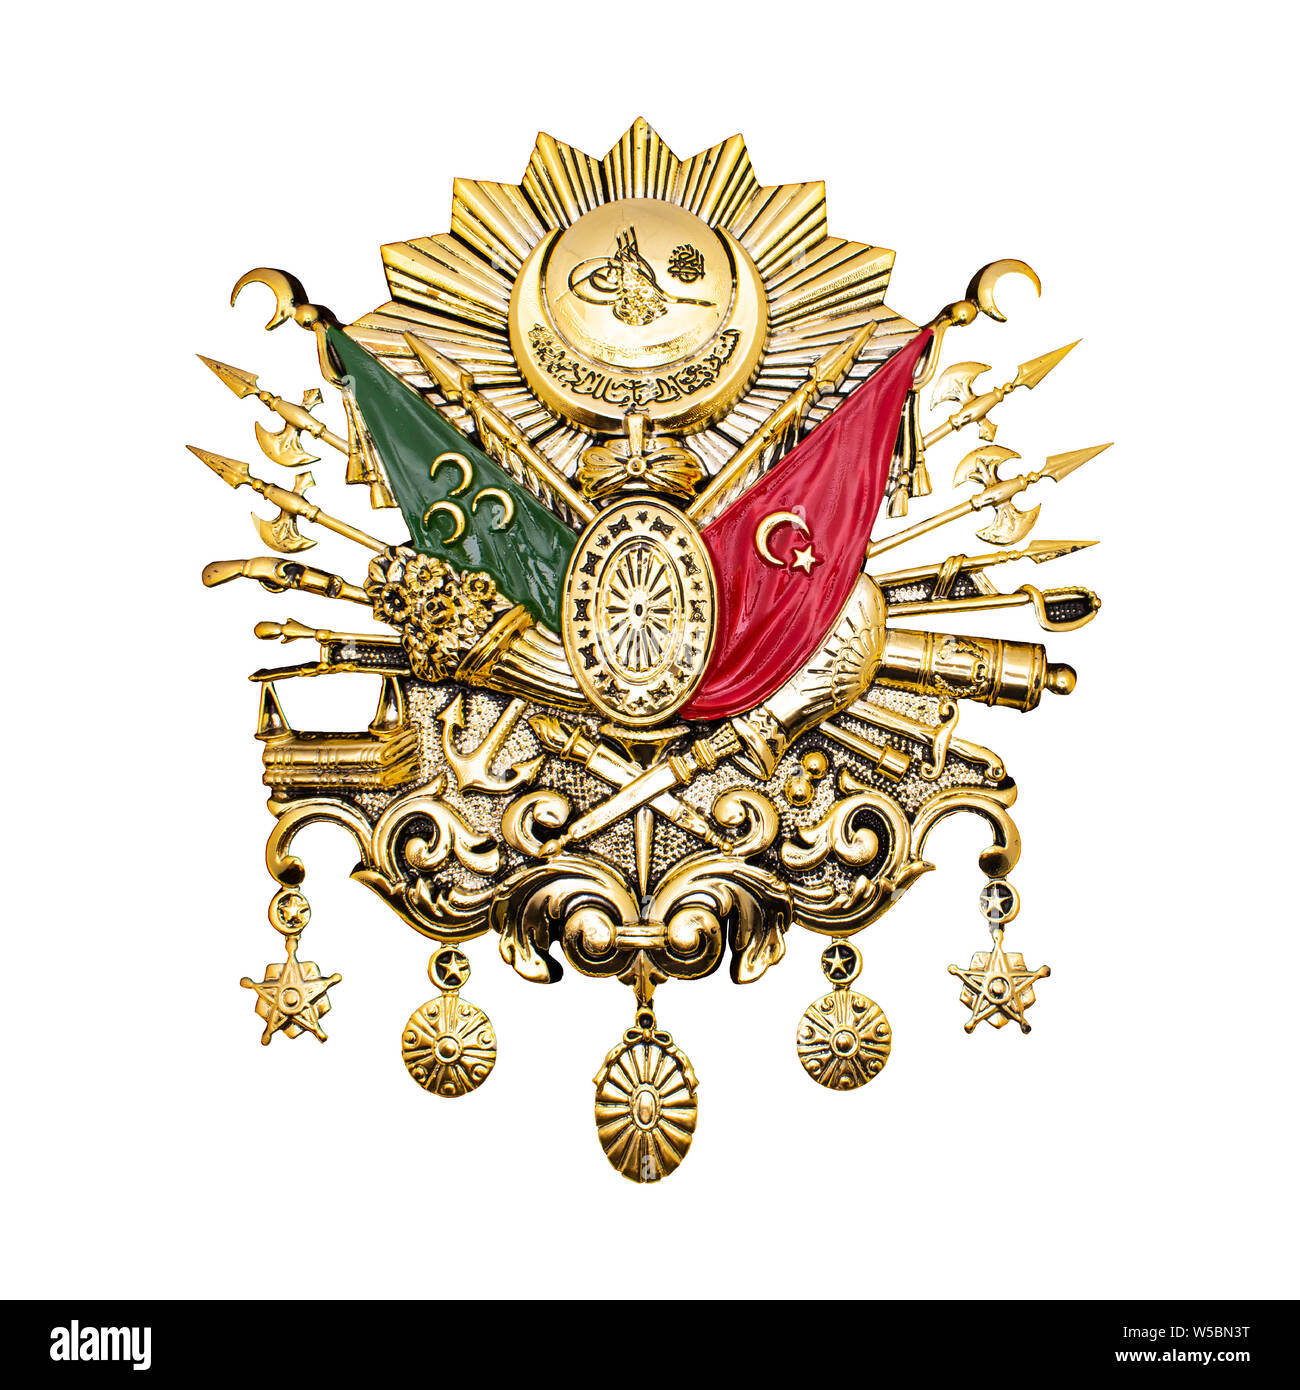 Ottoman Empire Emblem. Golden-leaf Ottoman Empire Emblem isolated on white background Stock Photo